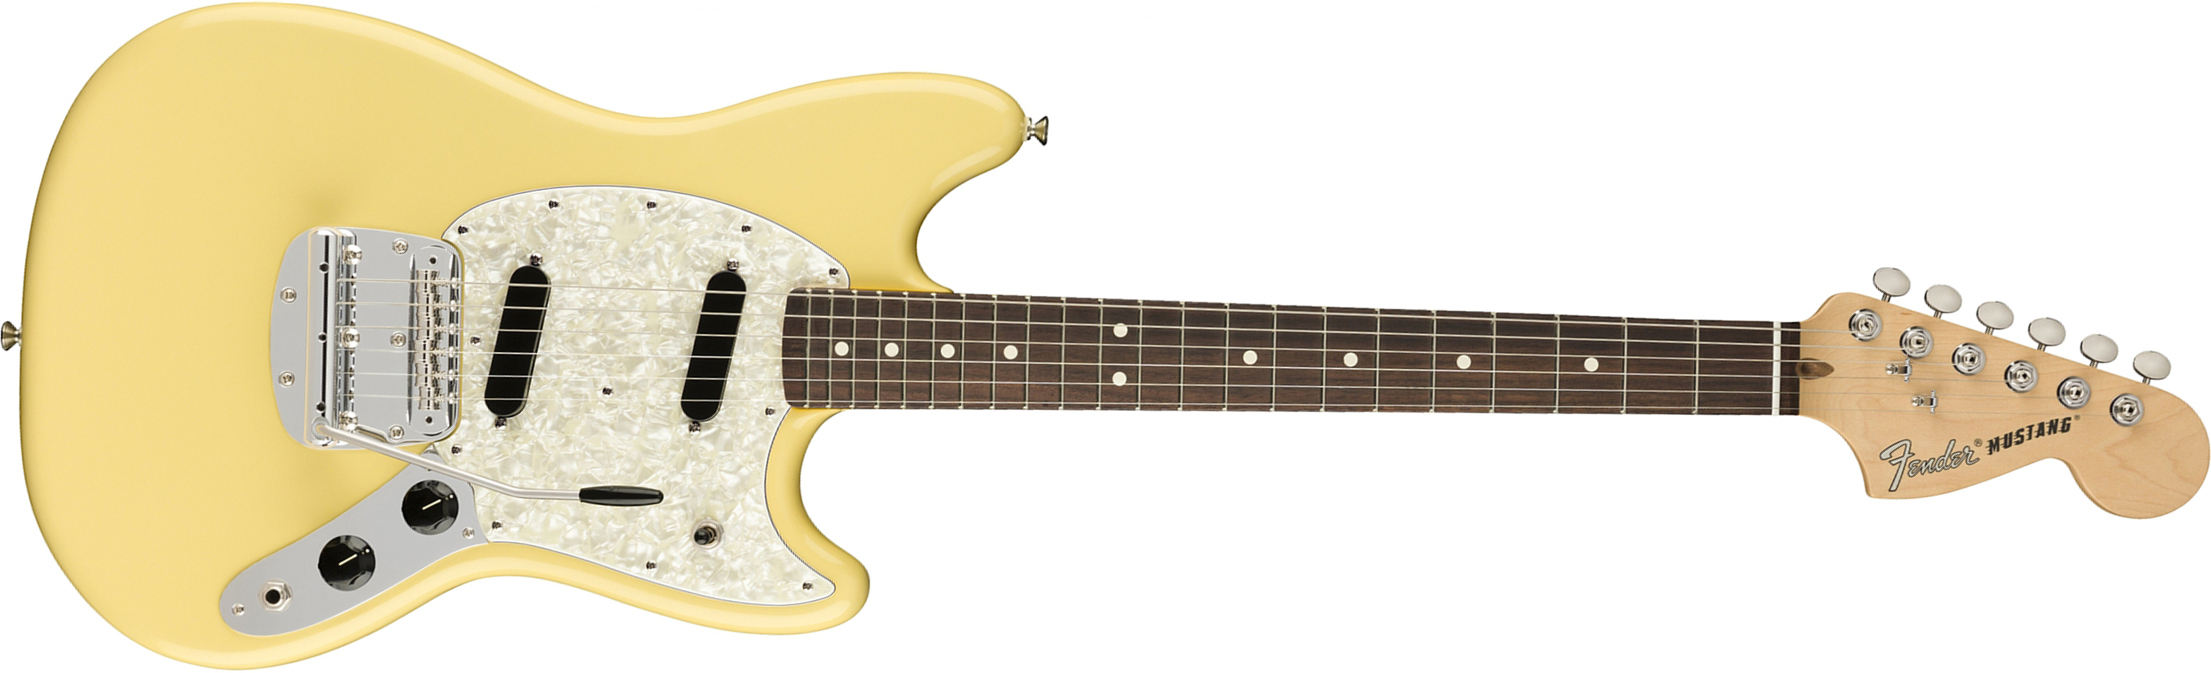 Fender Mustang American Performer Usa Ss Rw - Vintage White - Guitarra eléctrica de doble corte - Main picture